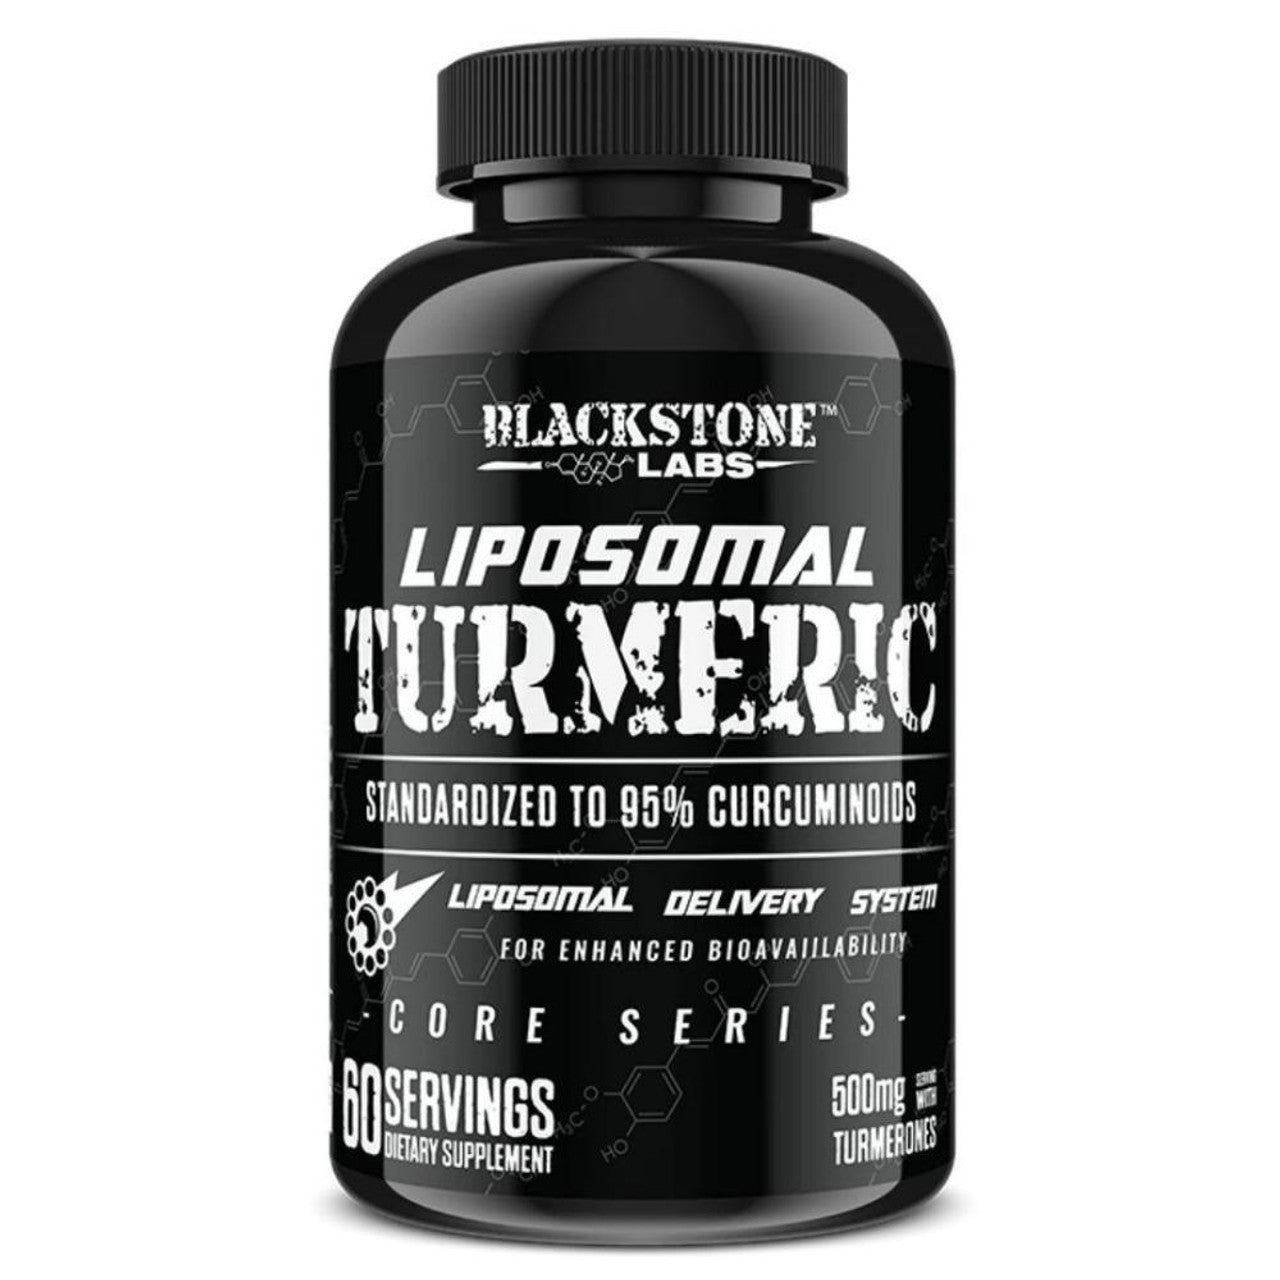 Blackstone Labs | Liposomal Tumermic